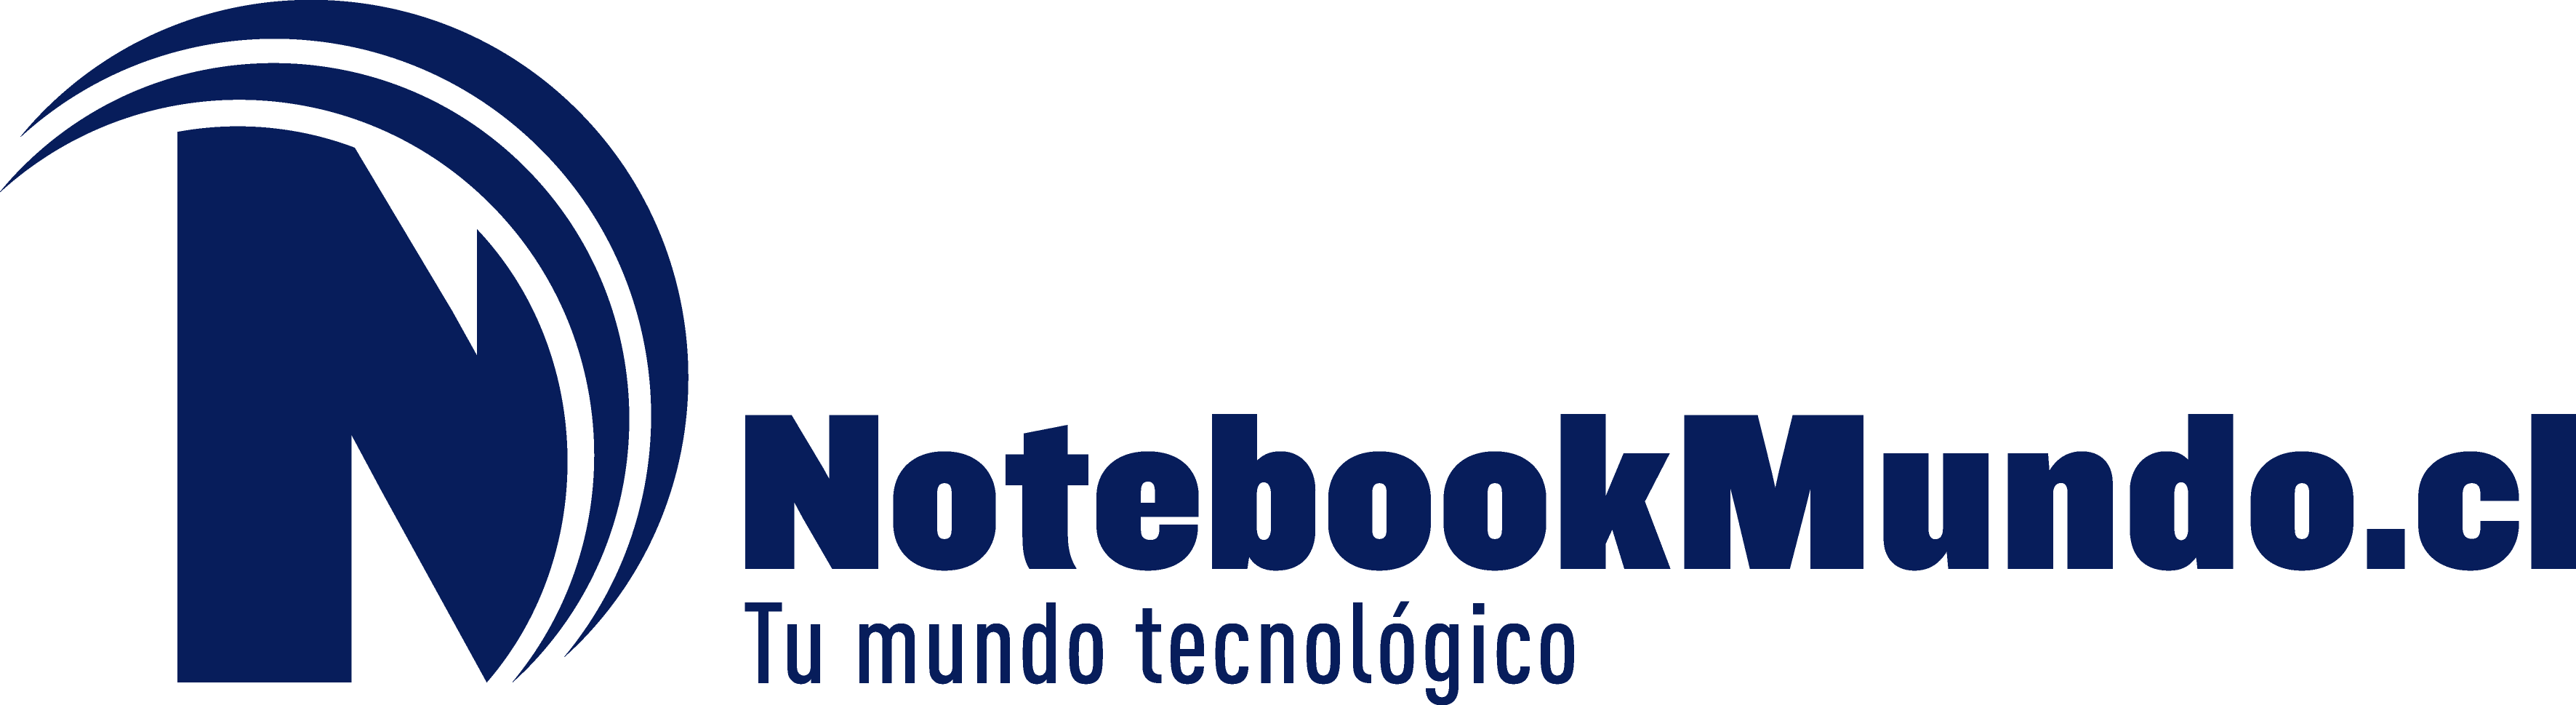 Notebook Mundo